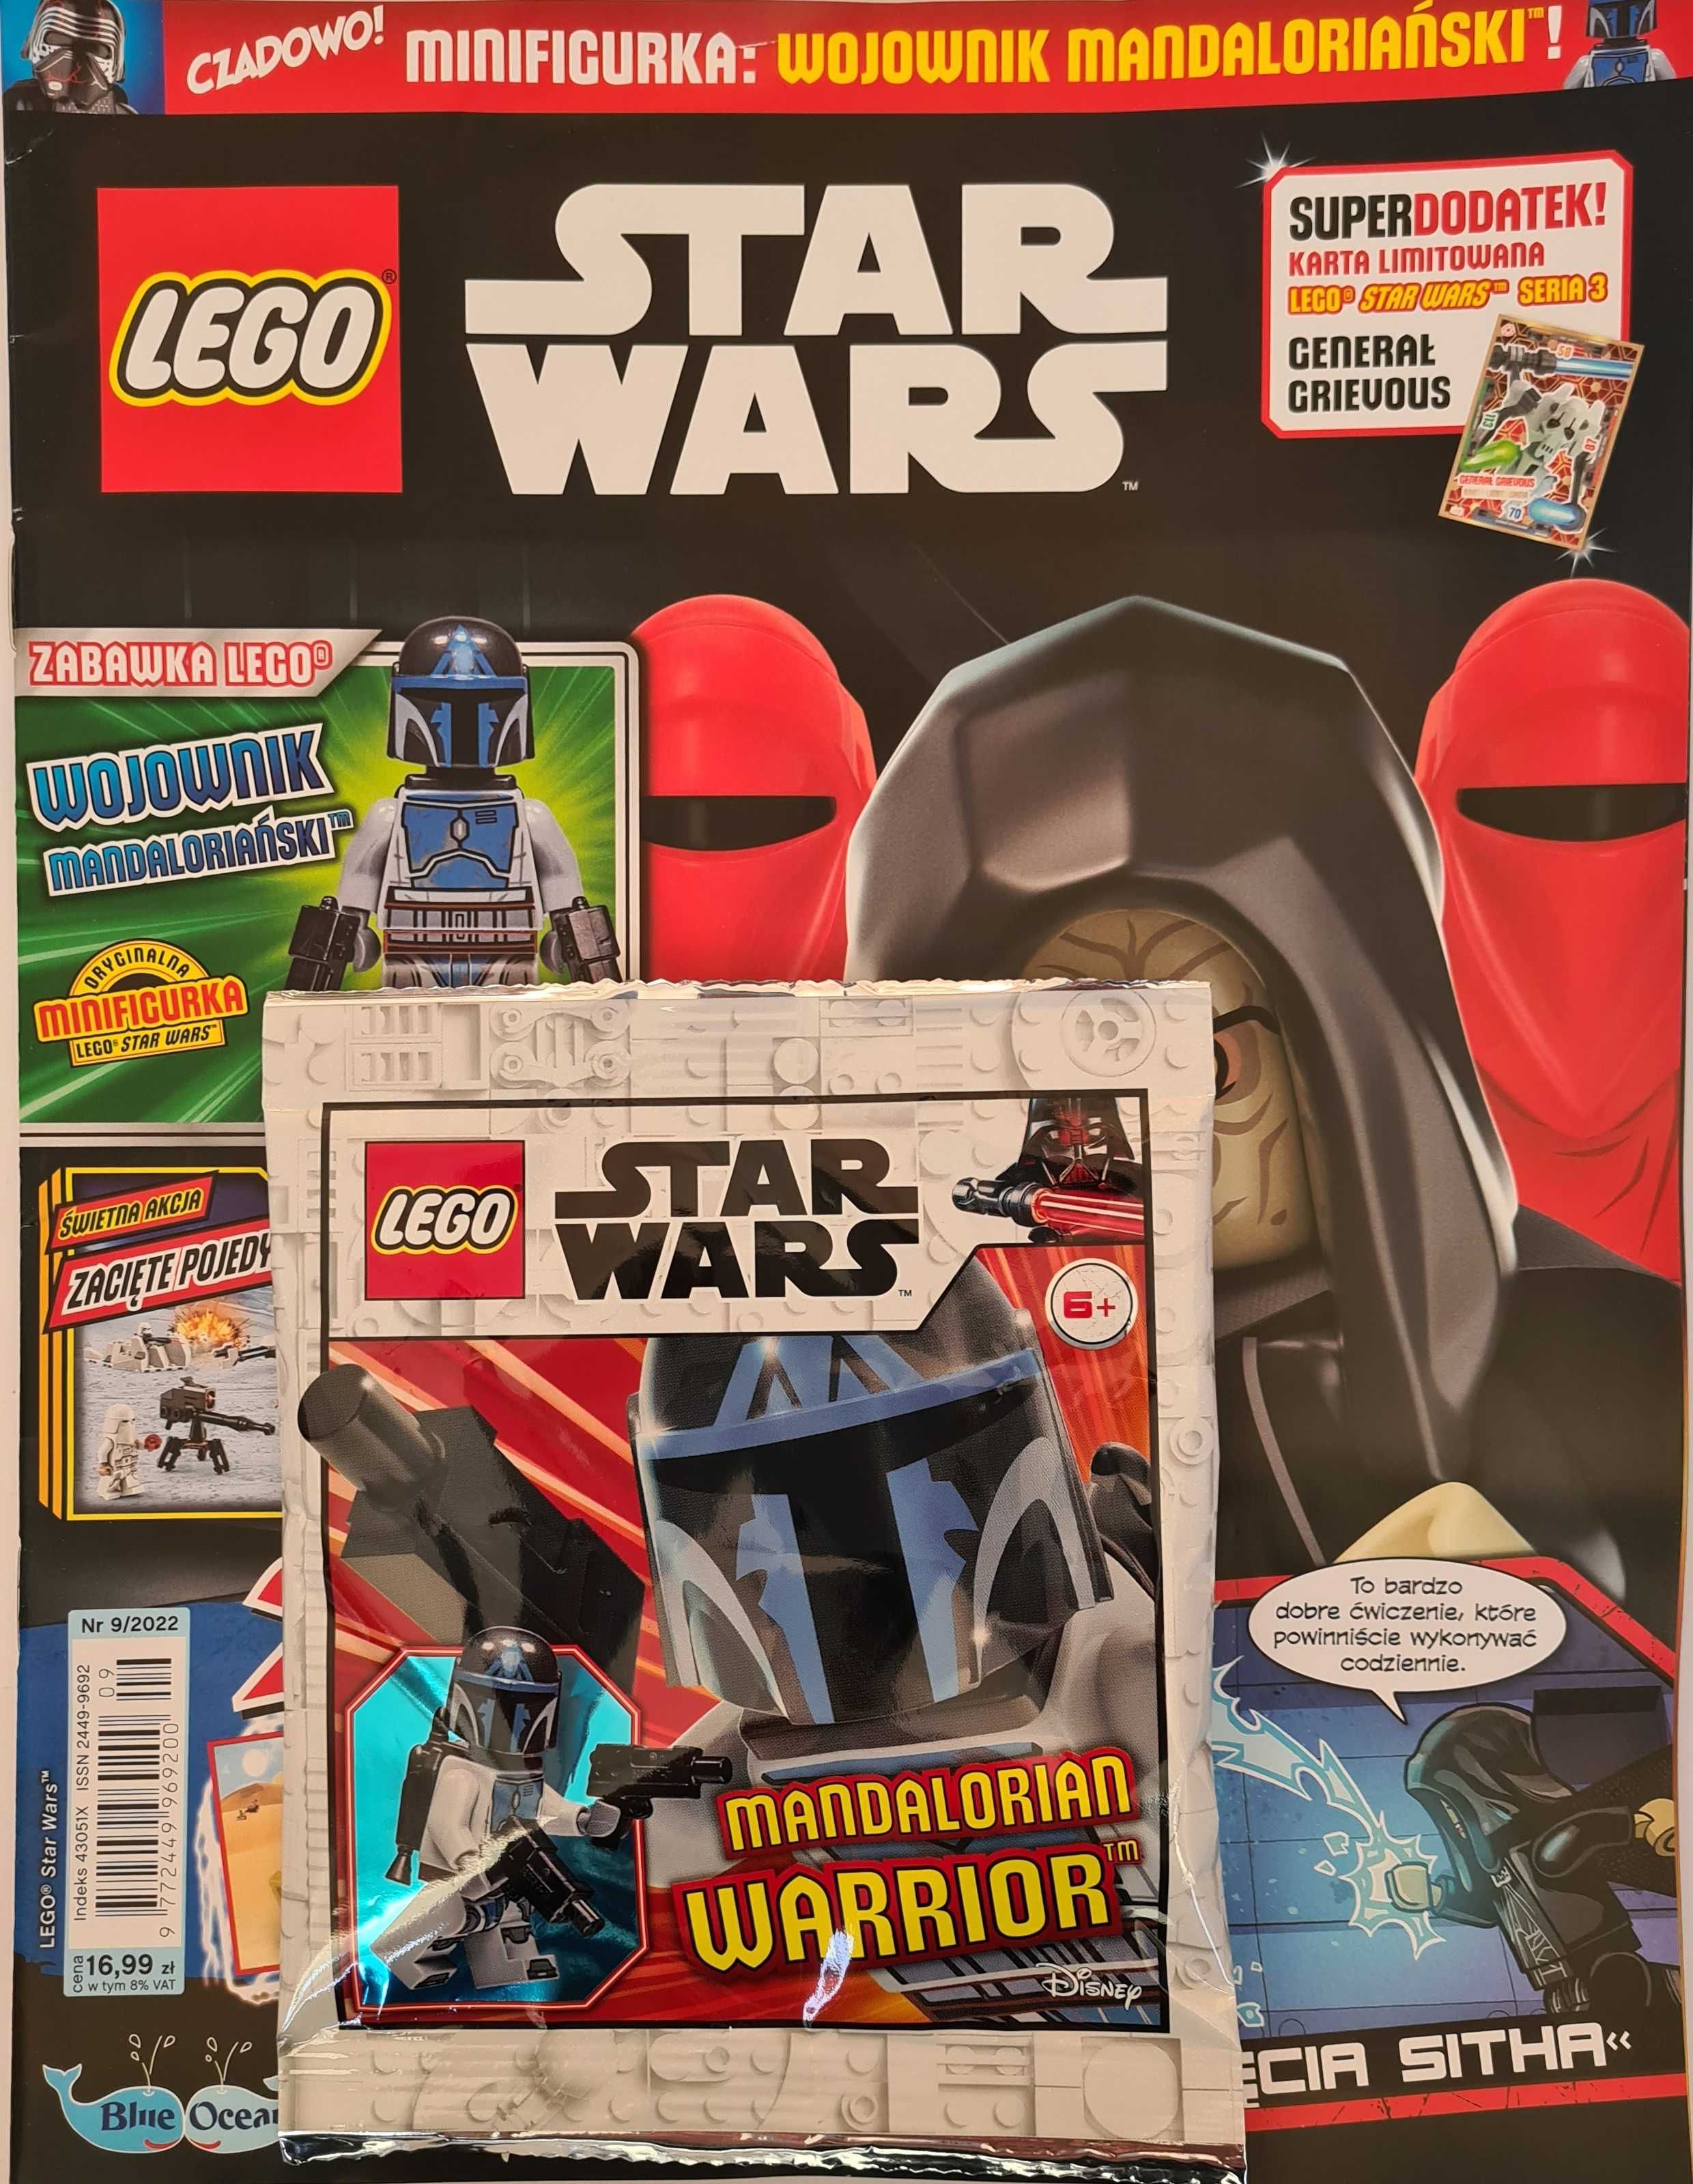 2 X magazyn LEGO Star Wars 9/2022  MANDLORIAN WARRIOR + Sokół Milenium